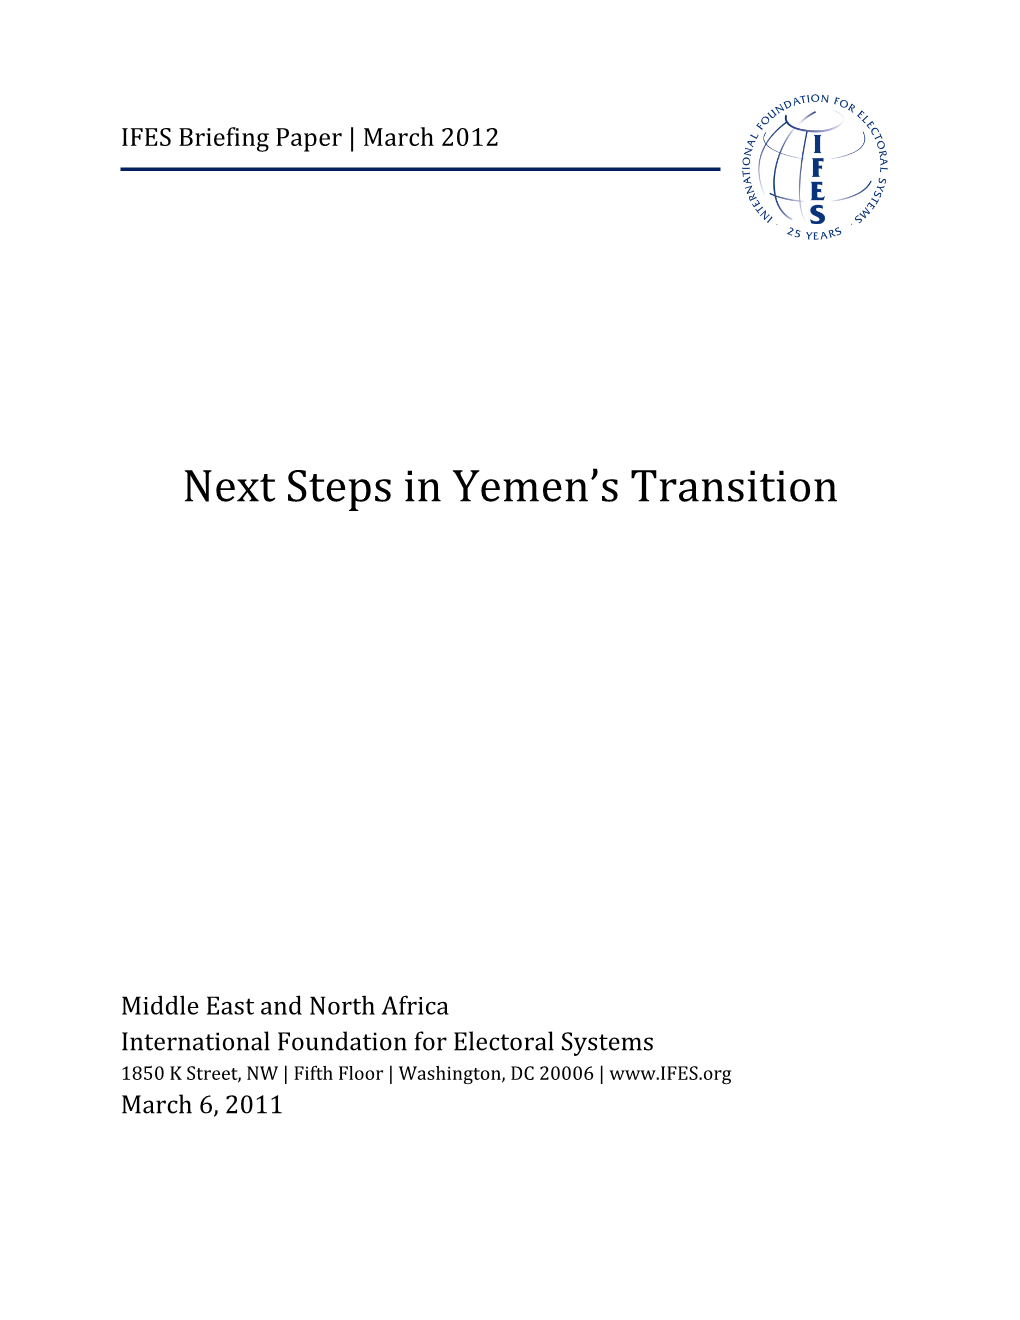 Next Steps in Yemen's Transition